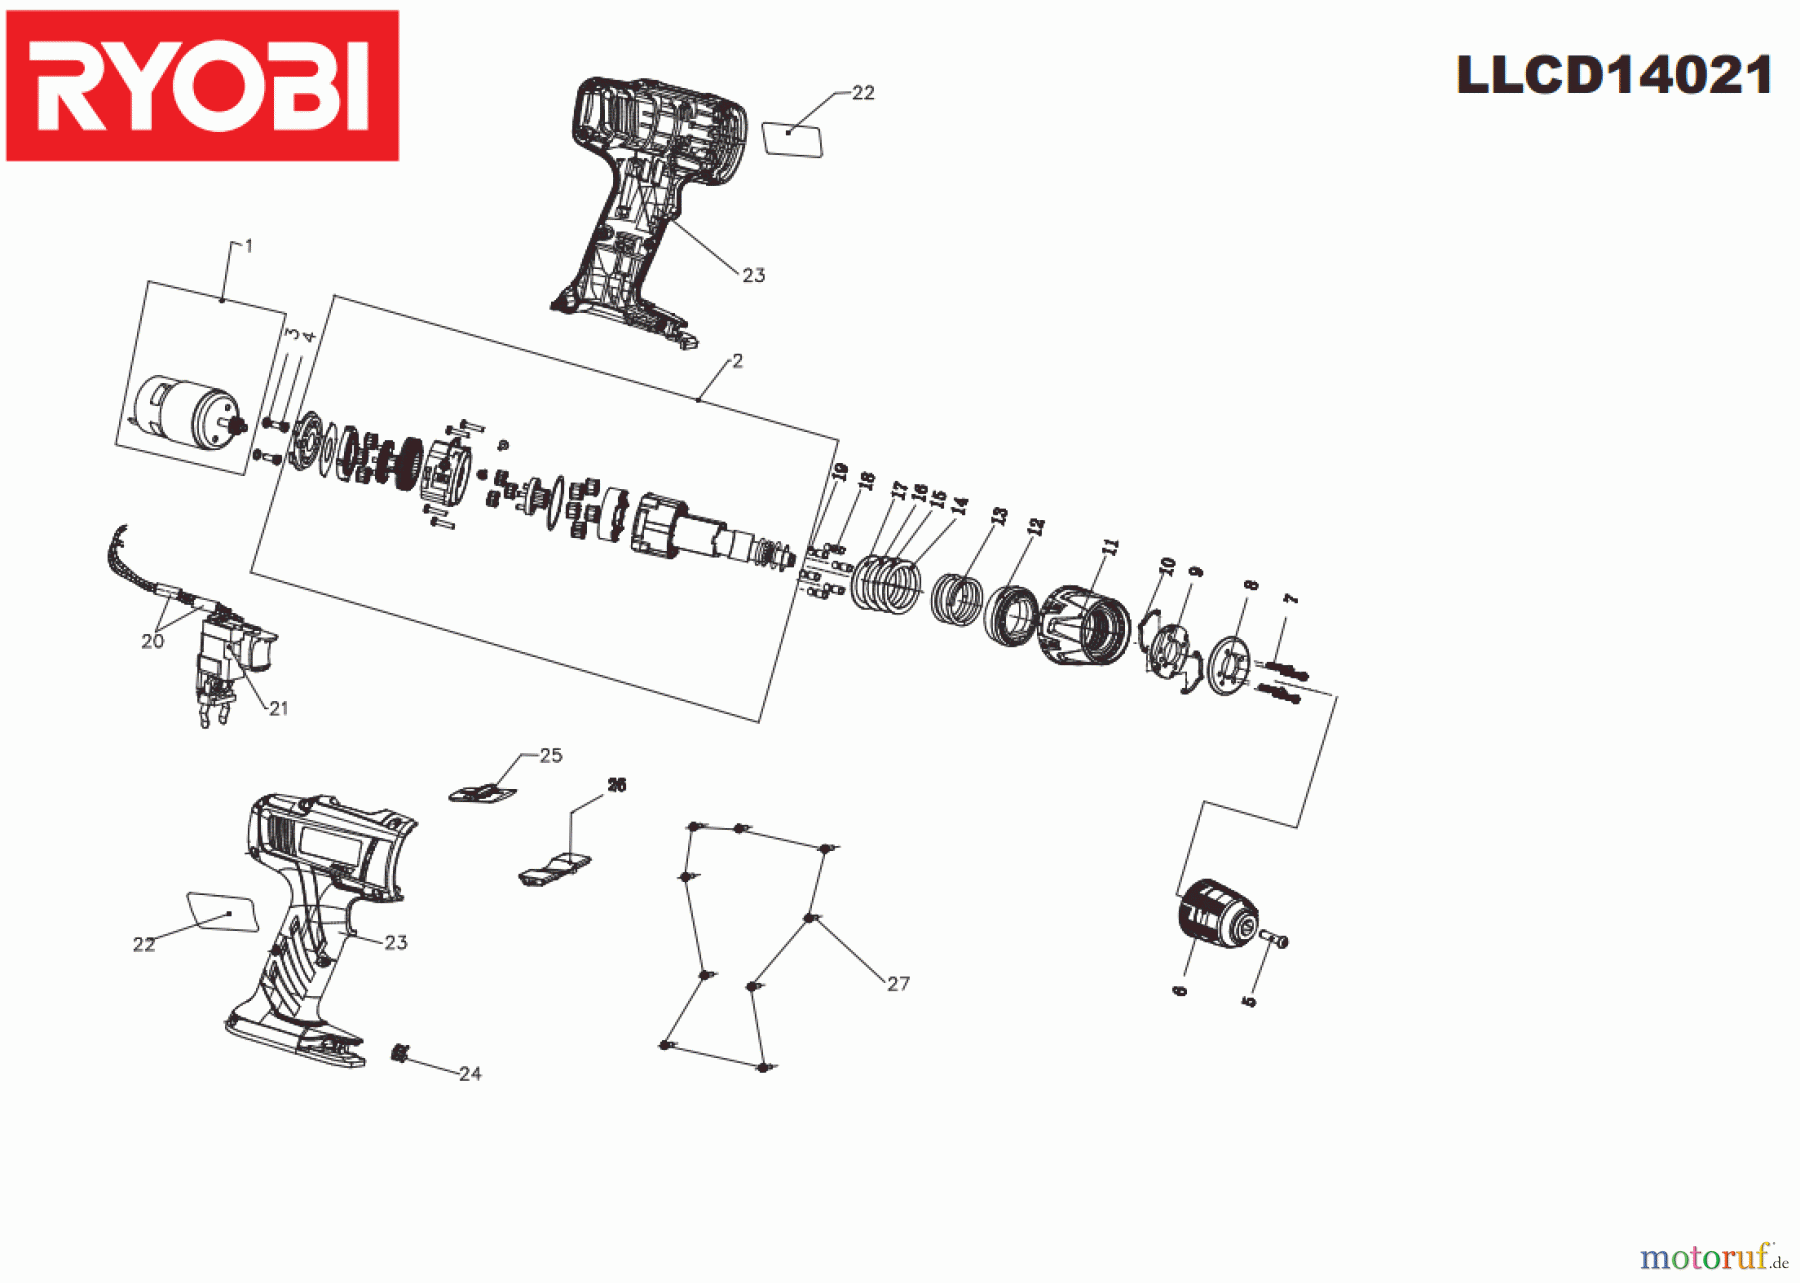  Ryobi (Schlag-)Bohrschrauber Bohrschrauber LLCD14021 Seite 1